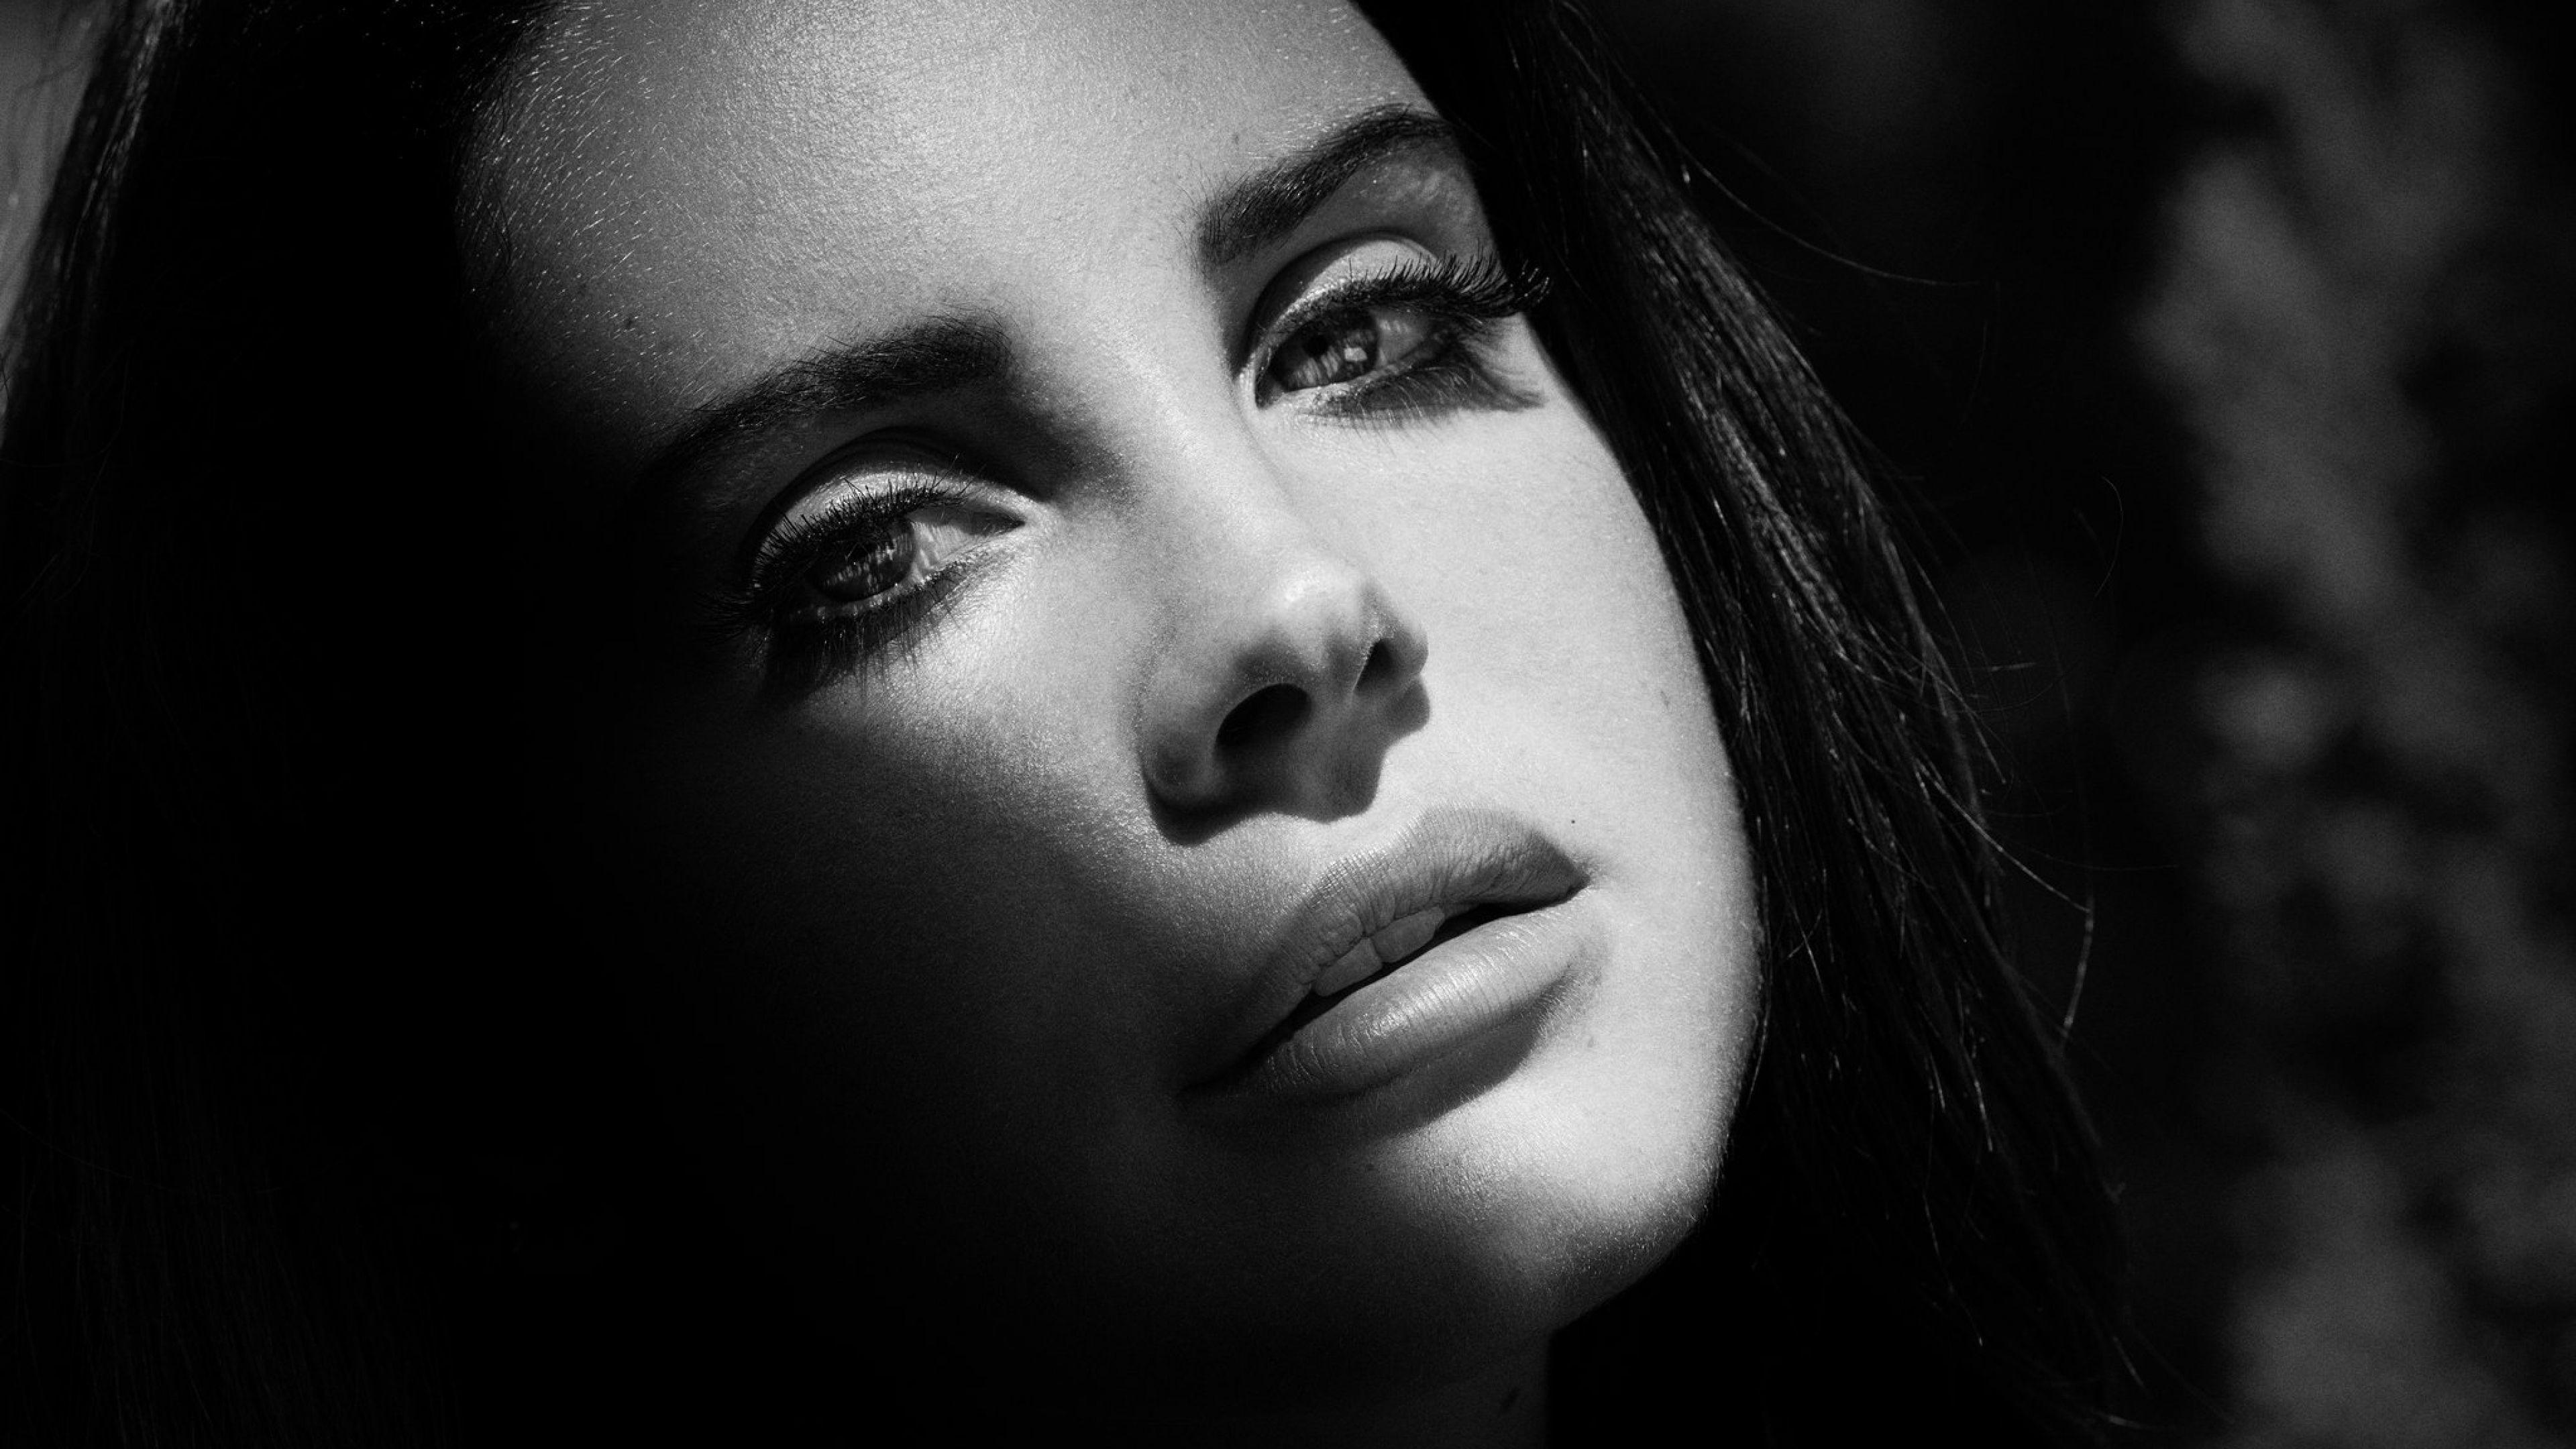 Monochrome Lana Del Rey Face Wallpaper 53282 3840x2160 px